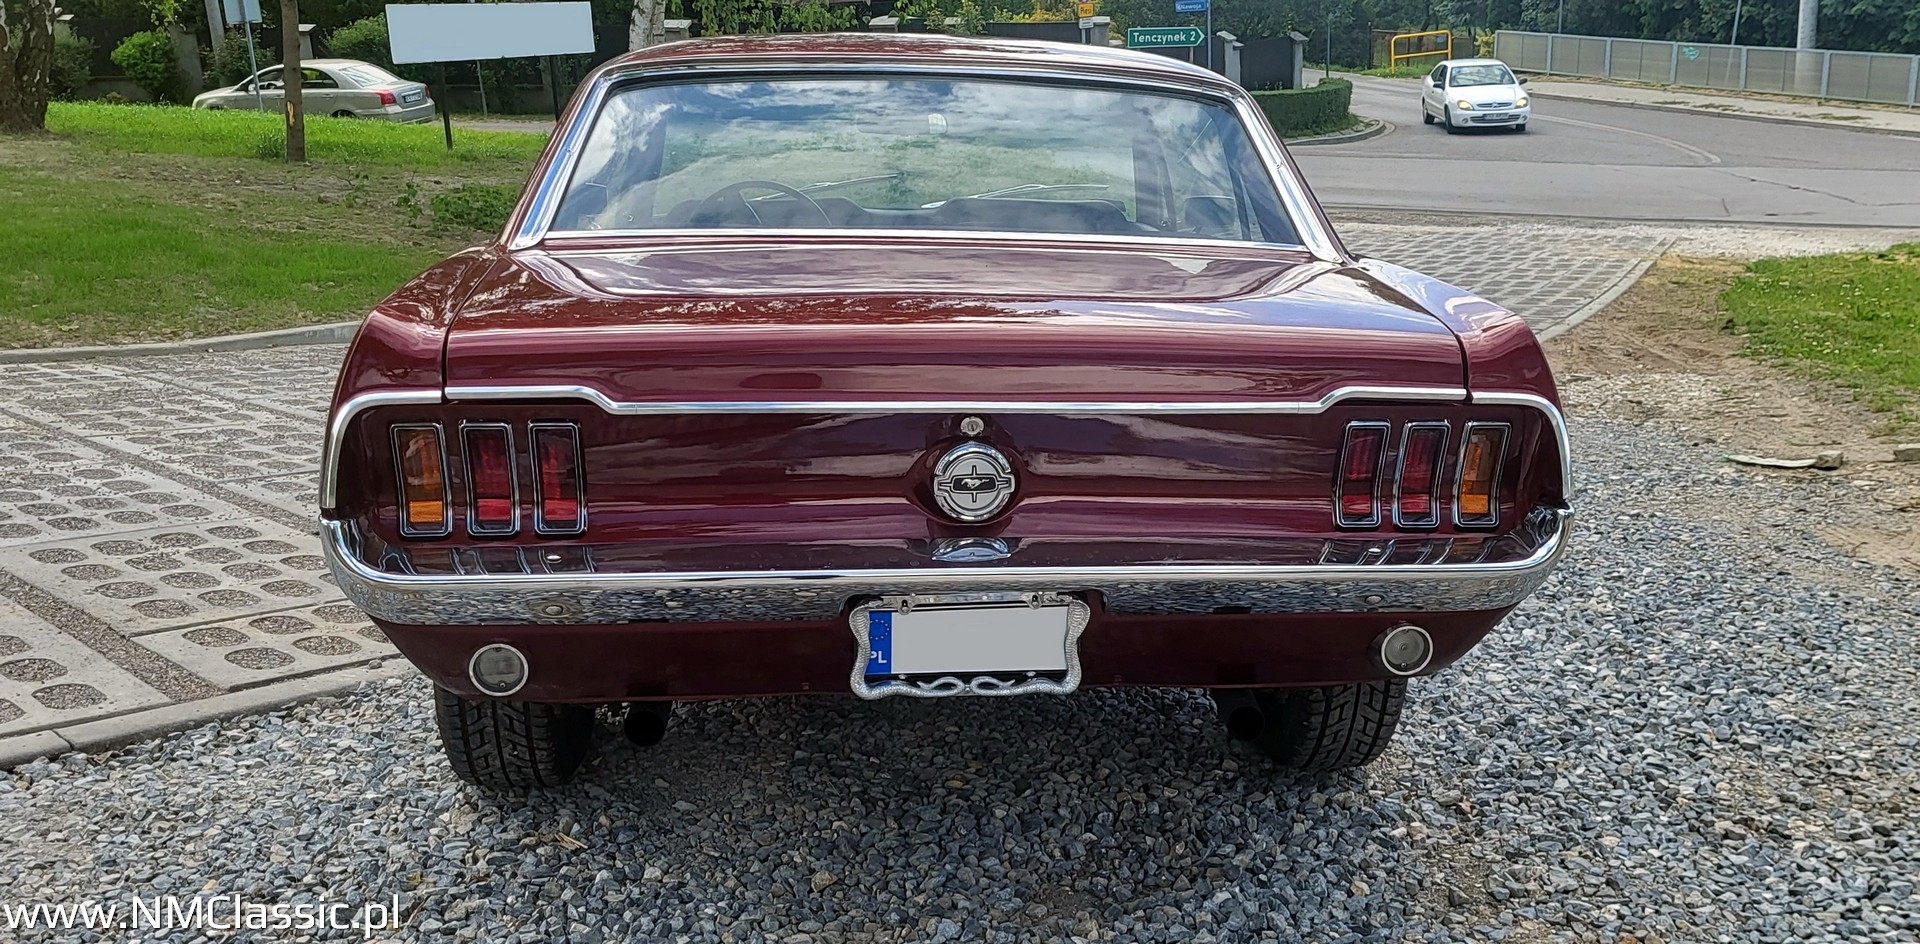 1_Mustang1968-06-23-08